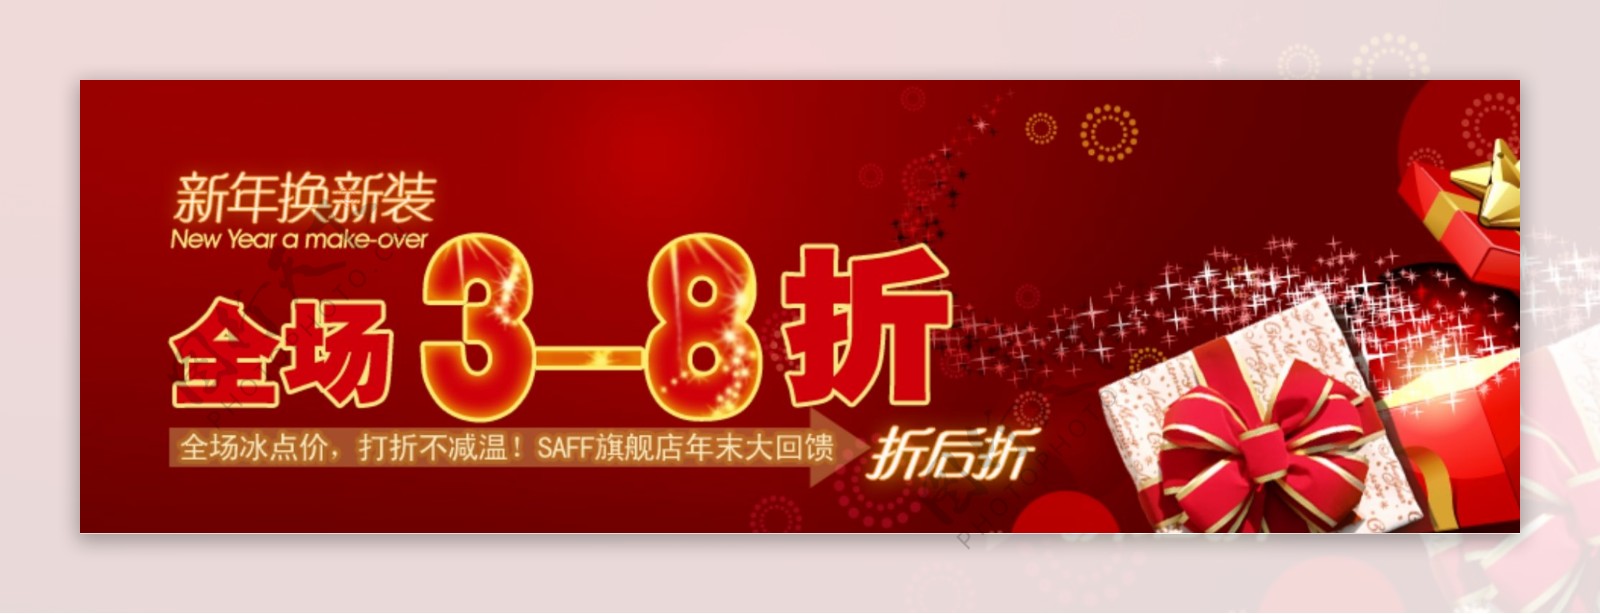 淘宝新年活动banner图片